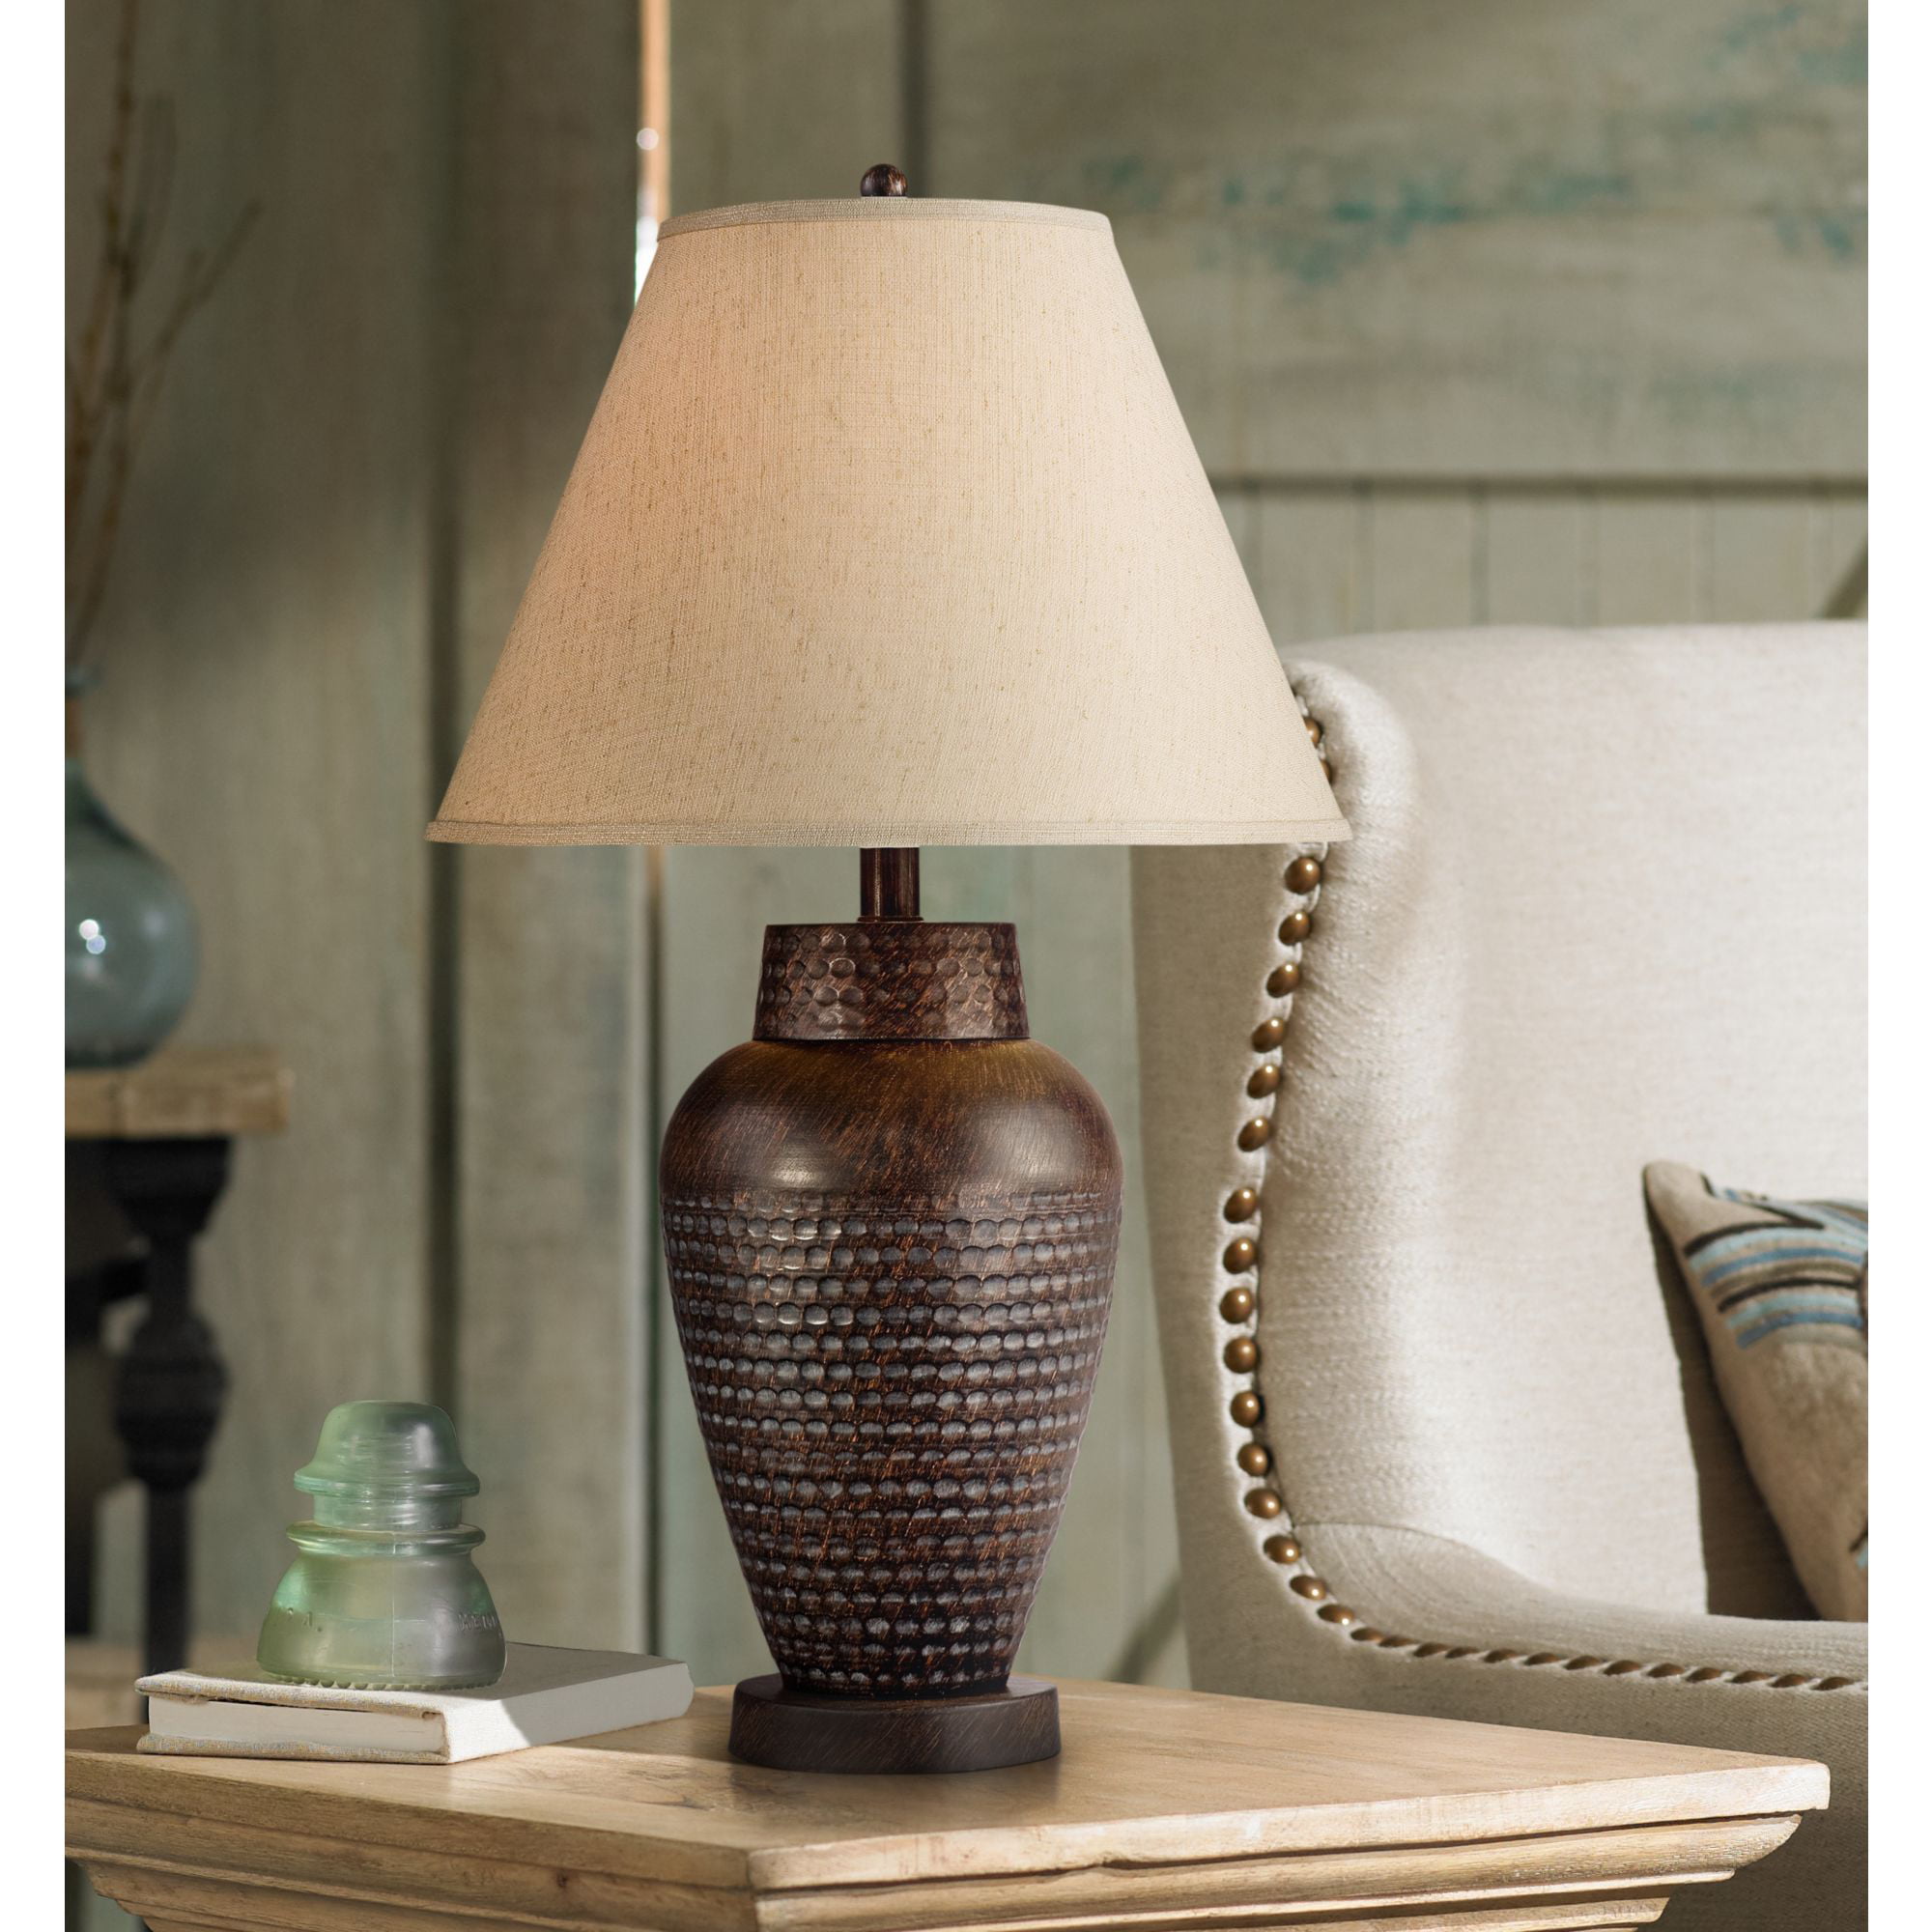 Regency Hill Modern Table Lamp Rustic Hammered Bronze Metal Vase